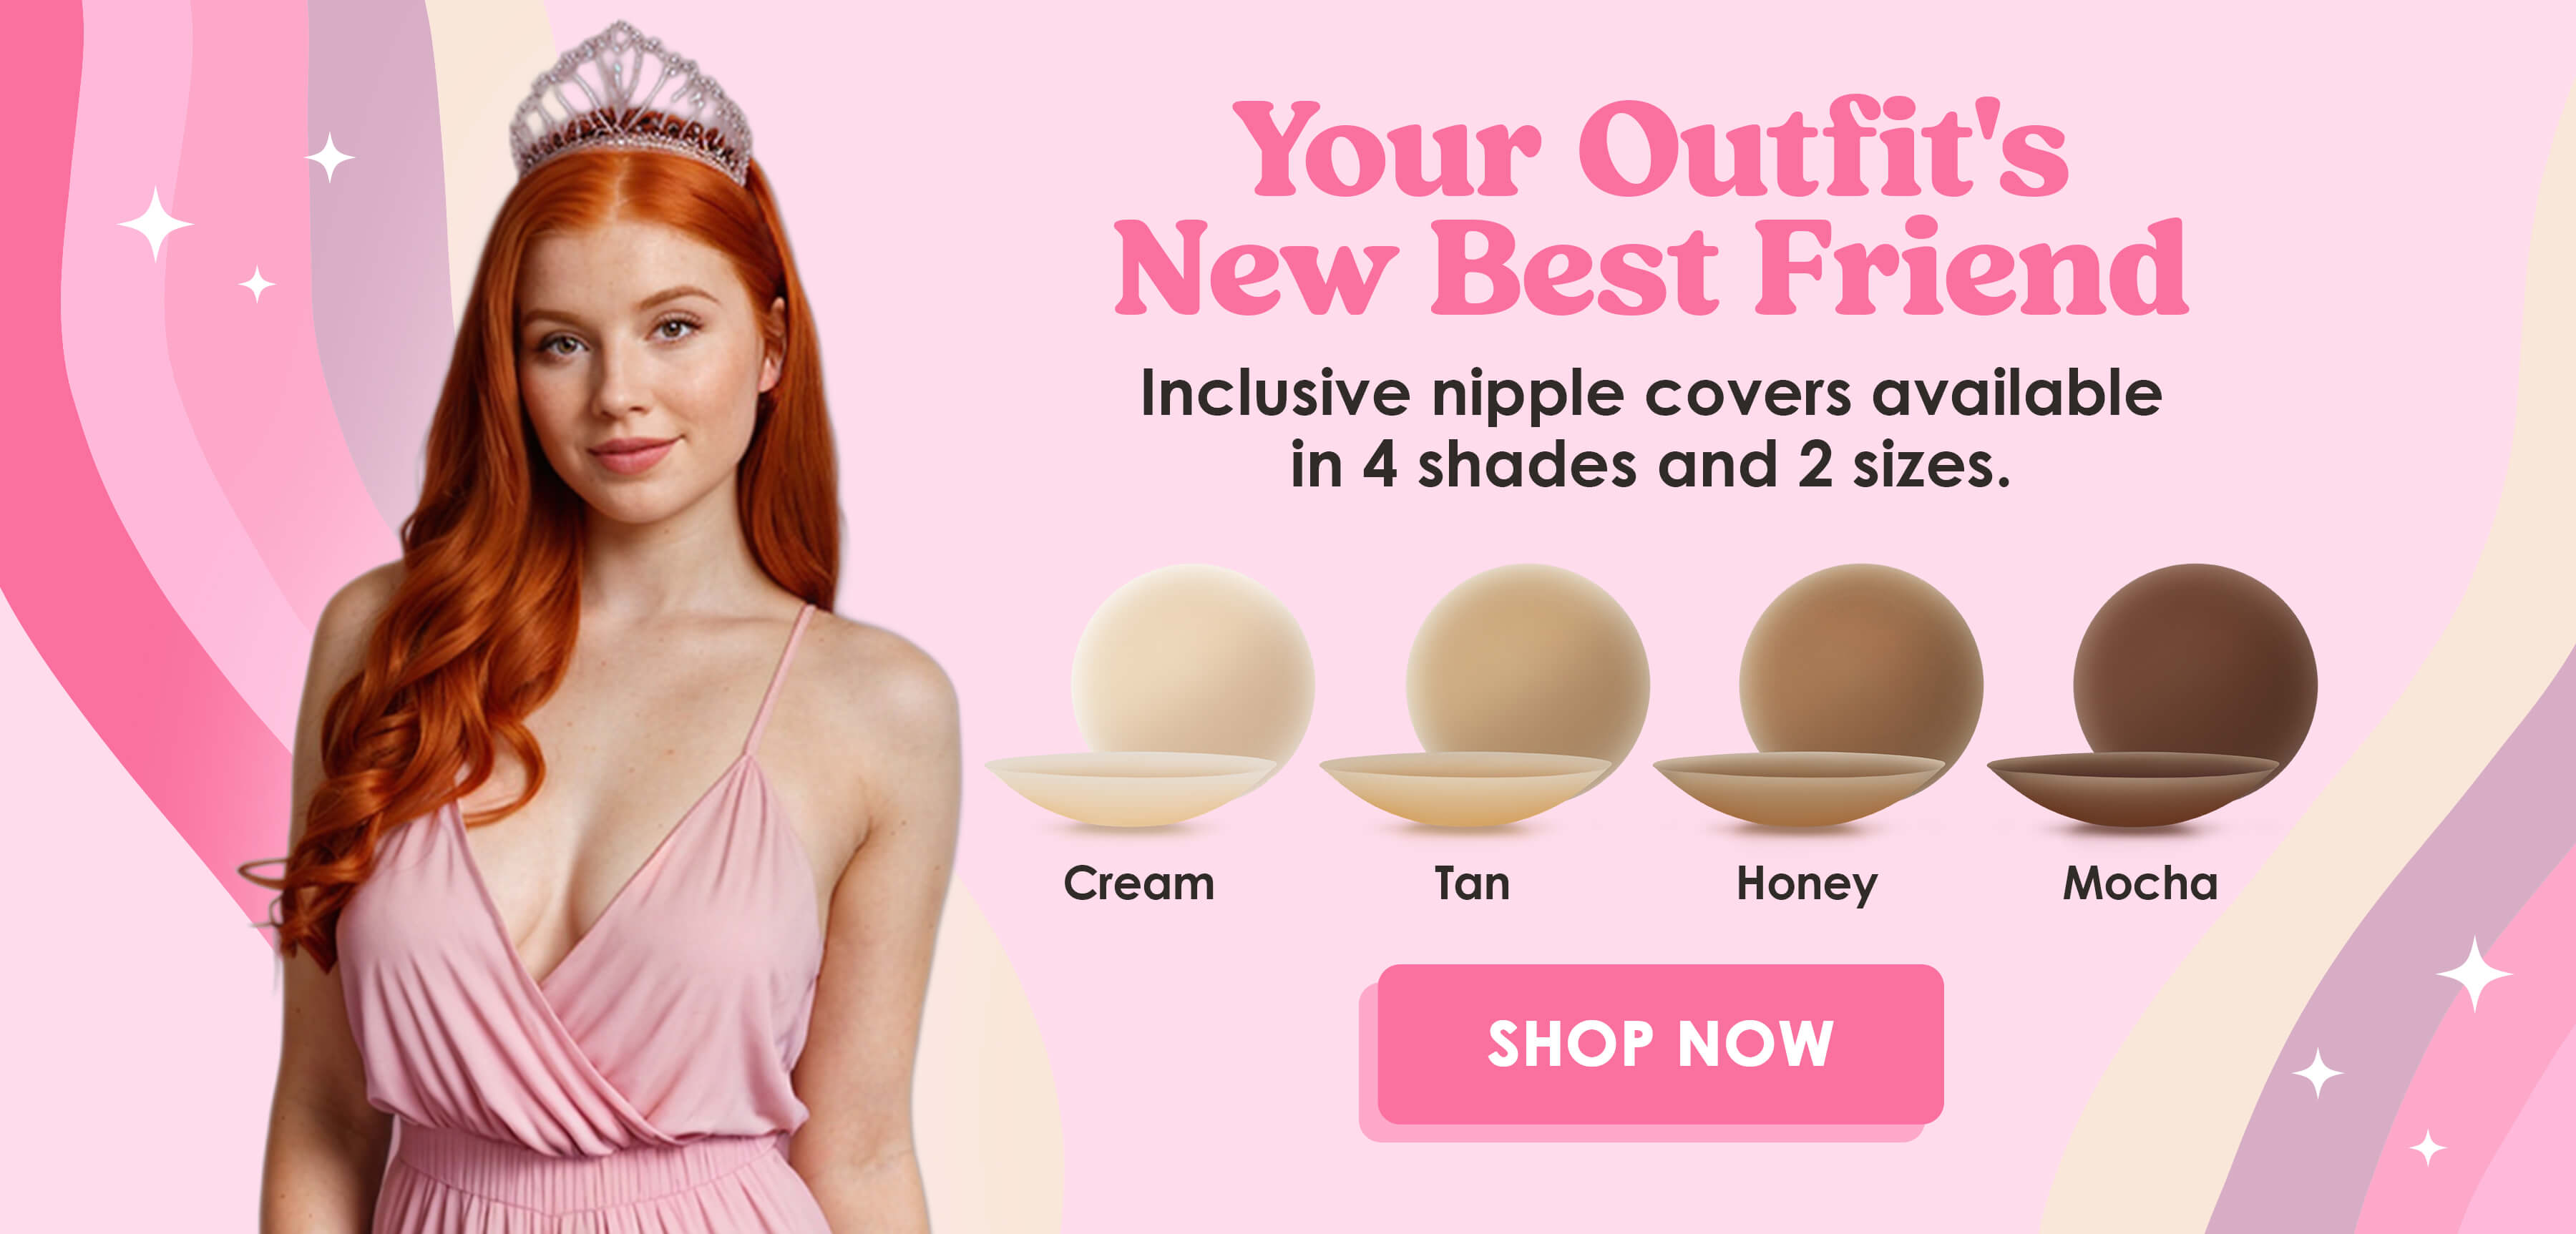 Photo of model wearing Princess Pasties nipple covers